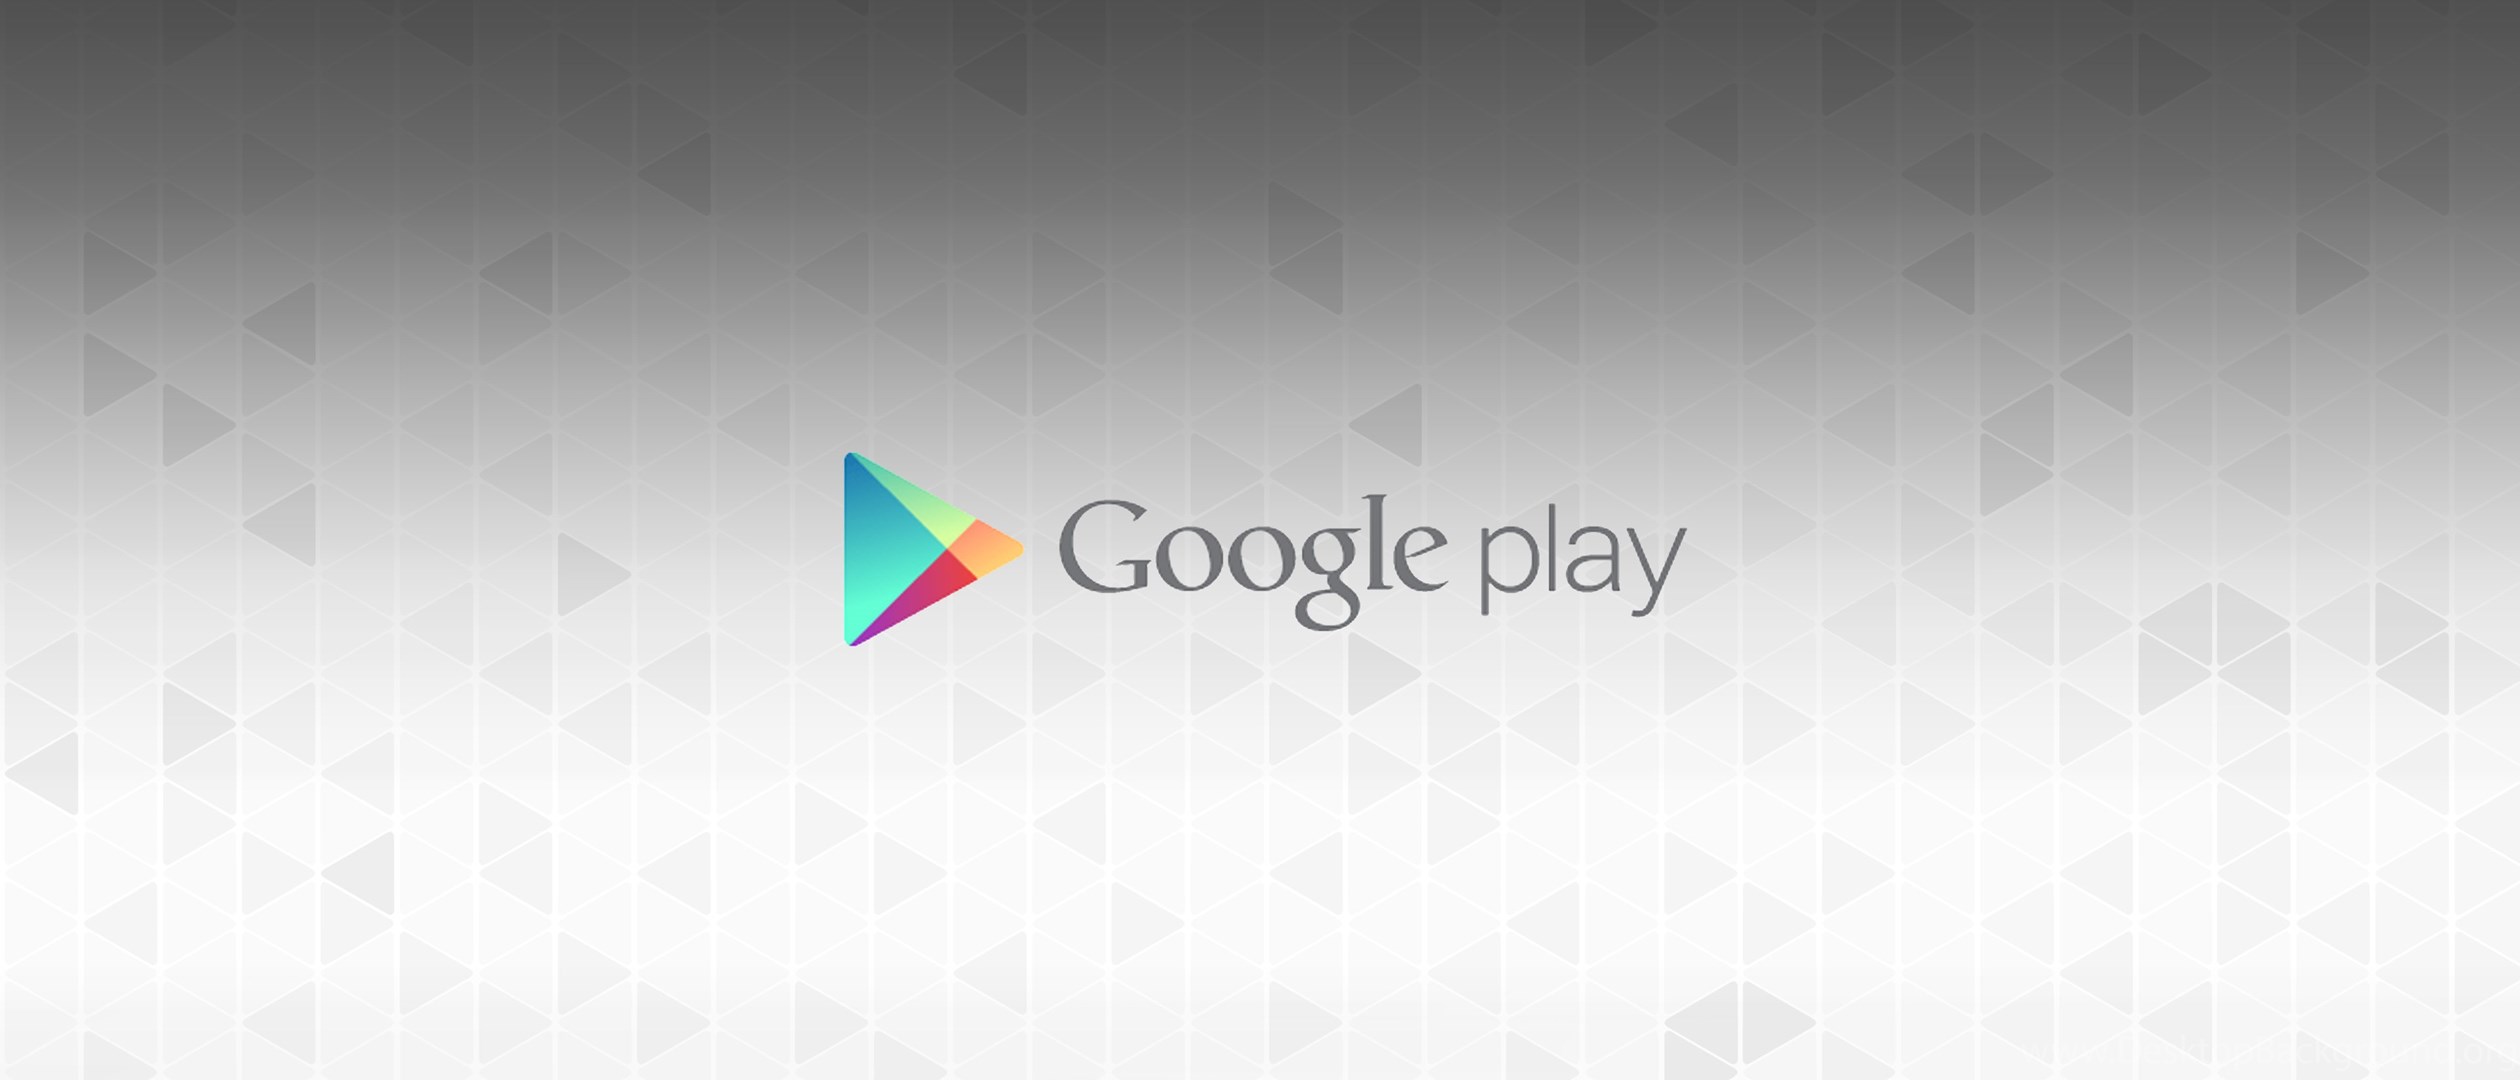 Google Play. Живые обои гугл плей. App Google Play Wallpaper. Гугл плей обои на главный экран. Политика google play